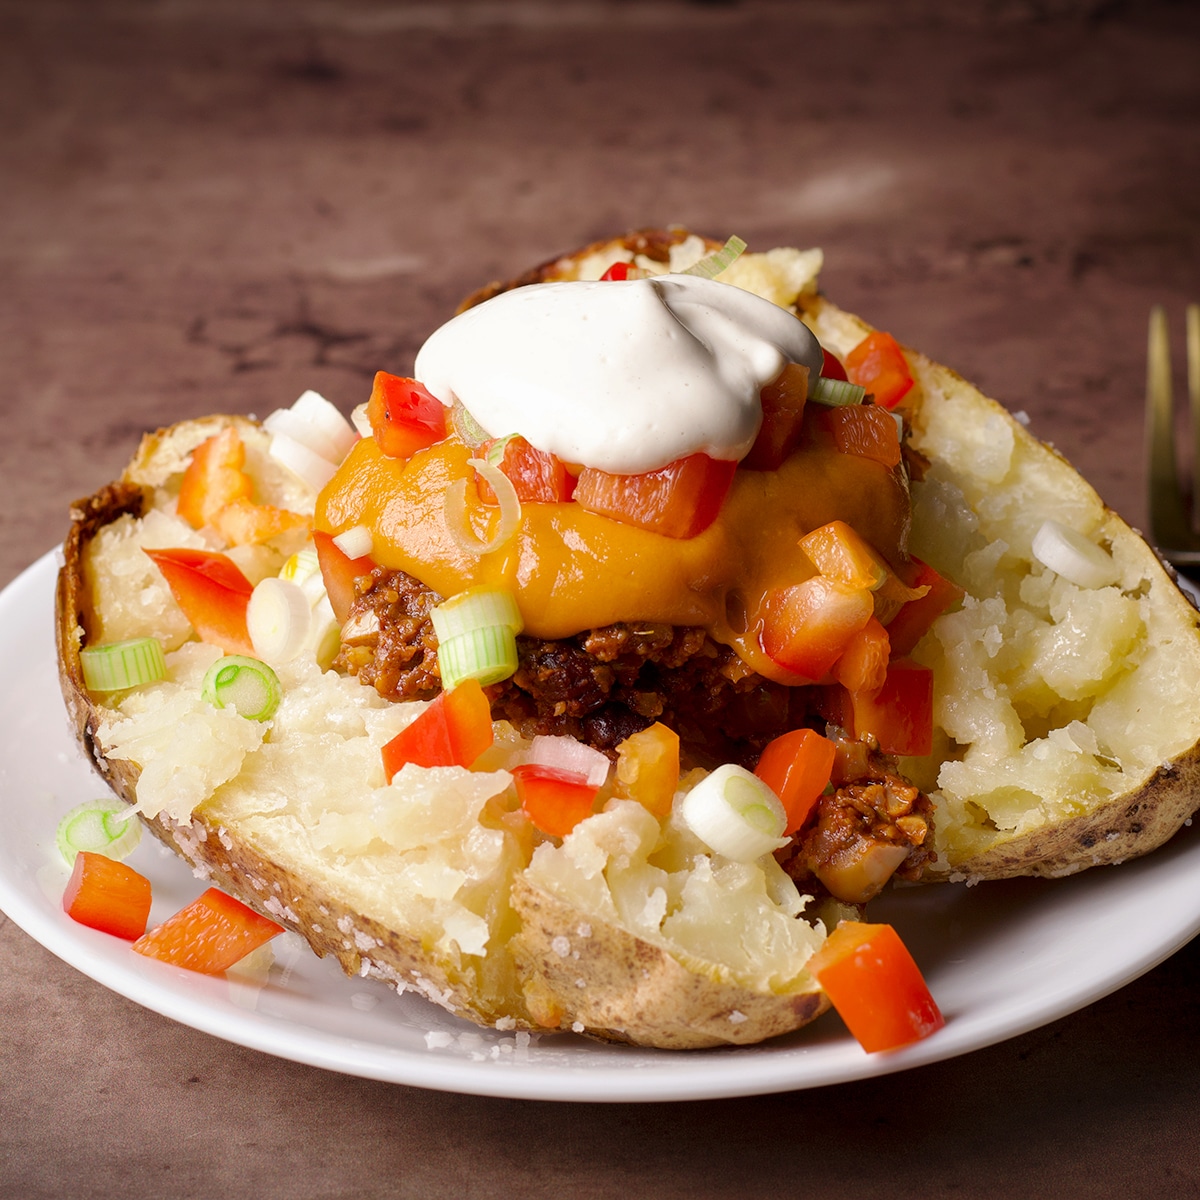 A loaded vegan baked potato stuffed with vegan taco meat, vegan nacho cheese sauce, and vegan sour cream.